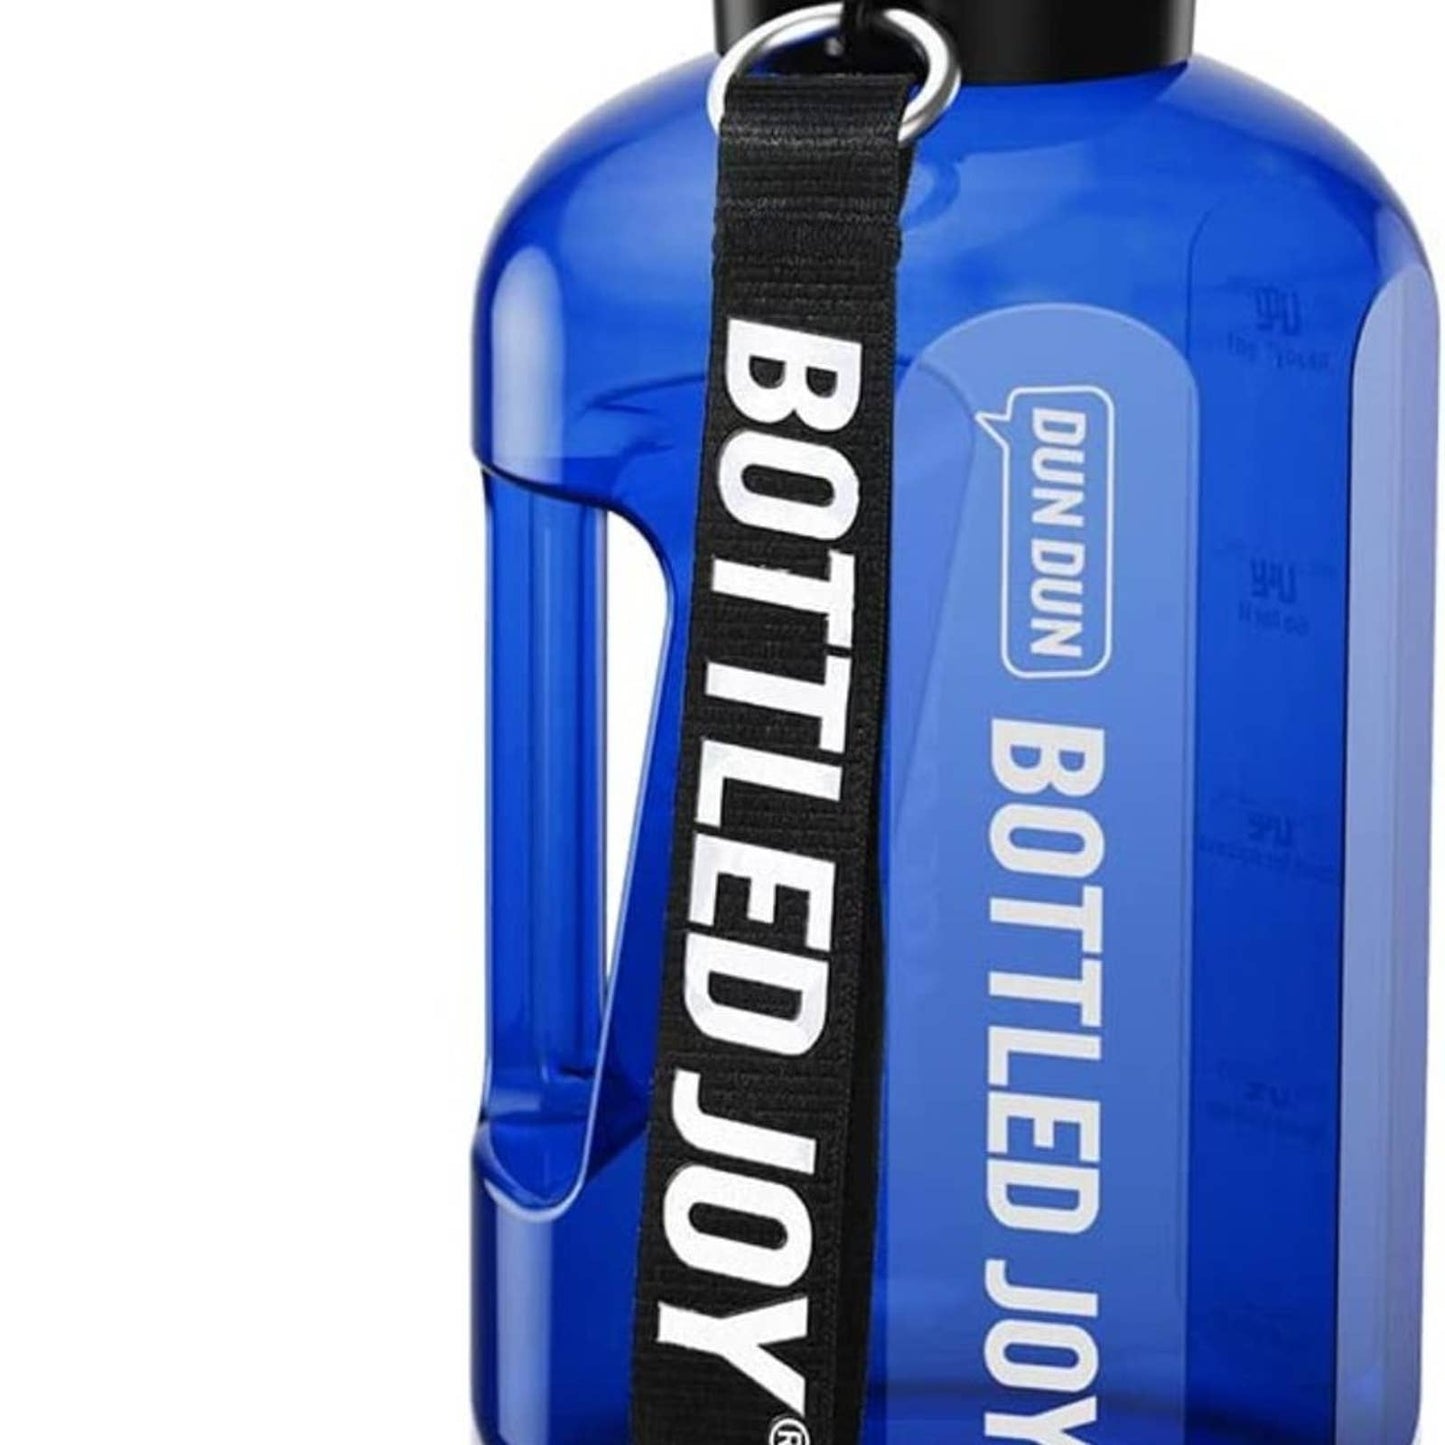 DUNDUN BOTTLED JOY, BPA-Free Plastic Water Bottles with Times to Drink